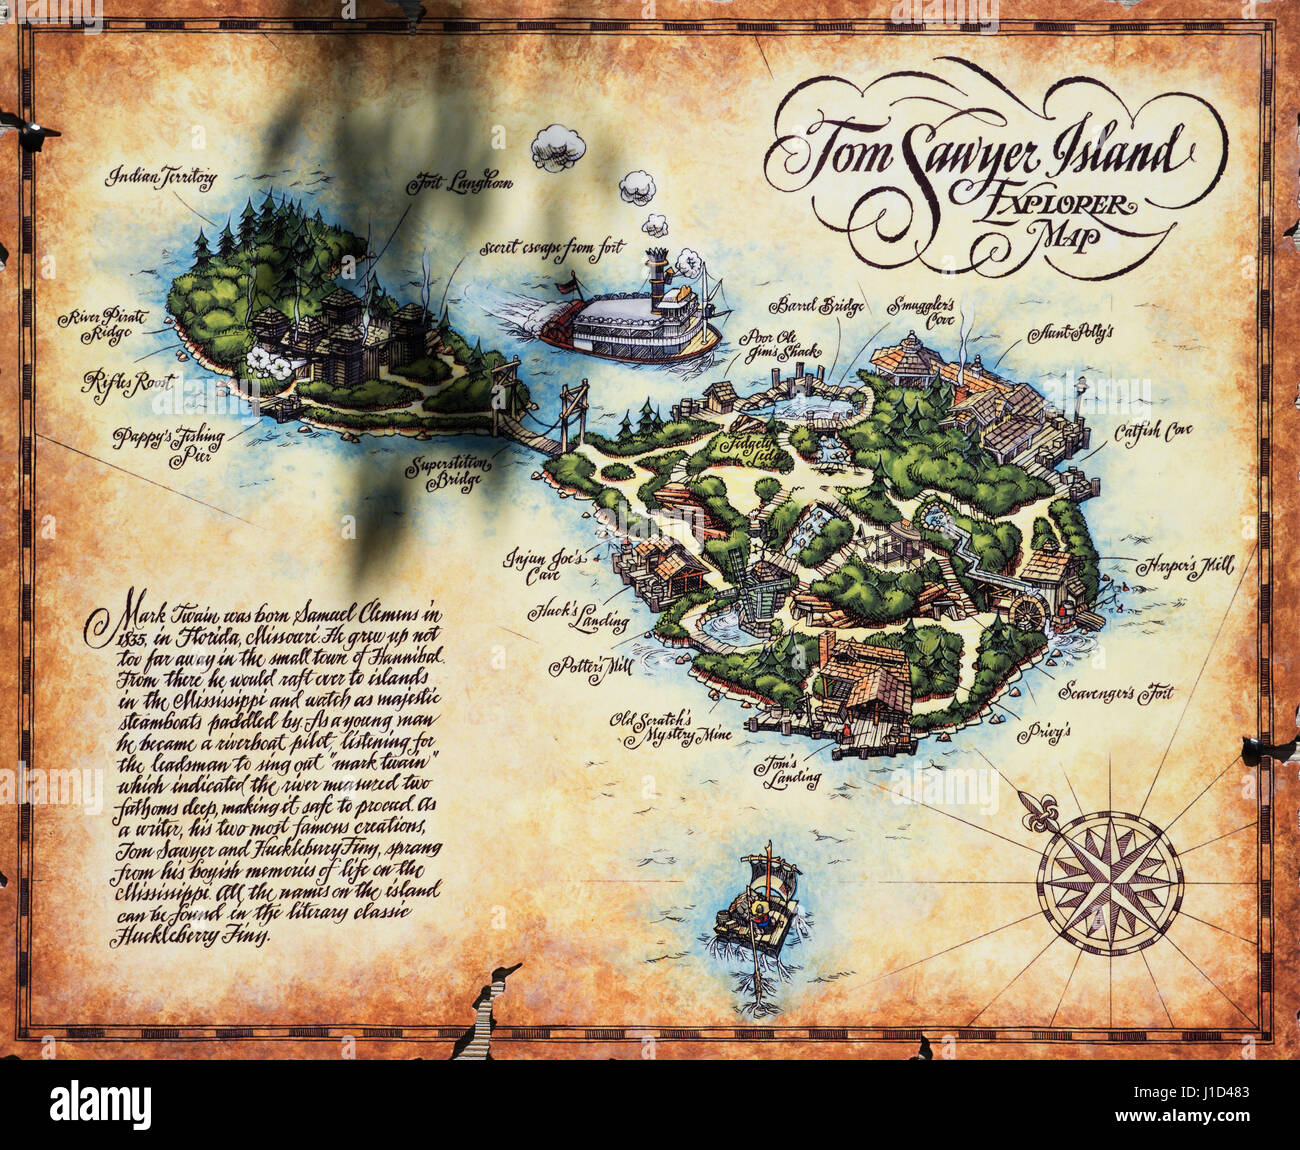 Tom Sawyer Island Explorer la carte, dans Frontierland au Magic Kingdom, Disney World Resort, Orlando en Floride Banque D'Images